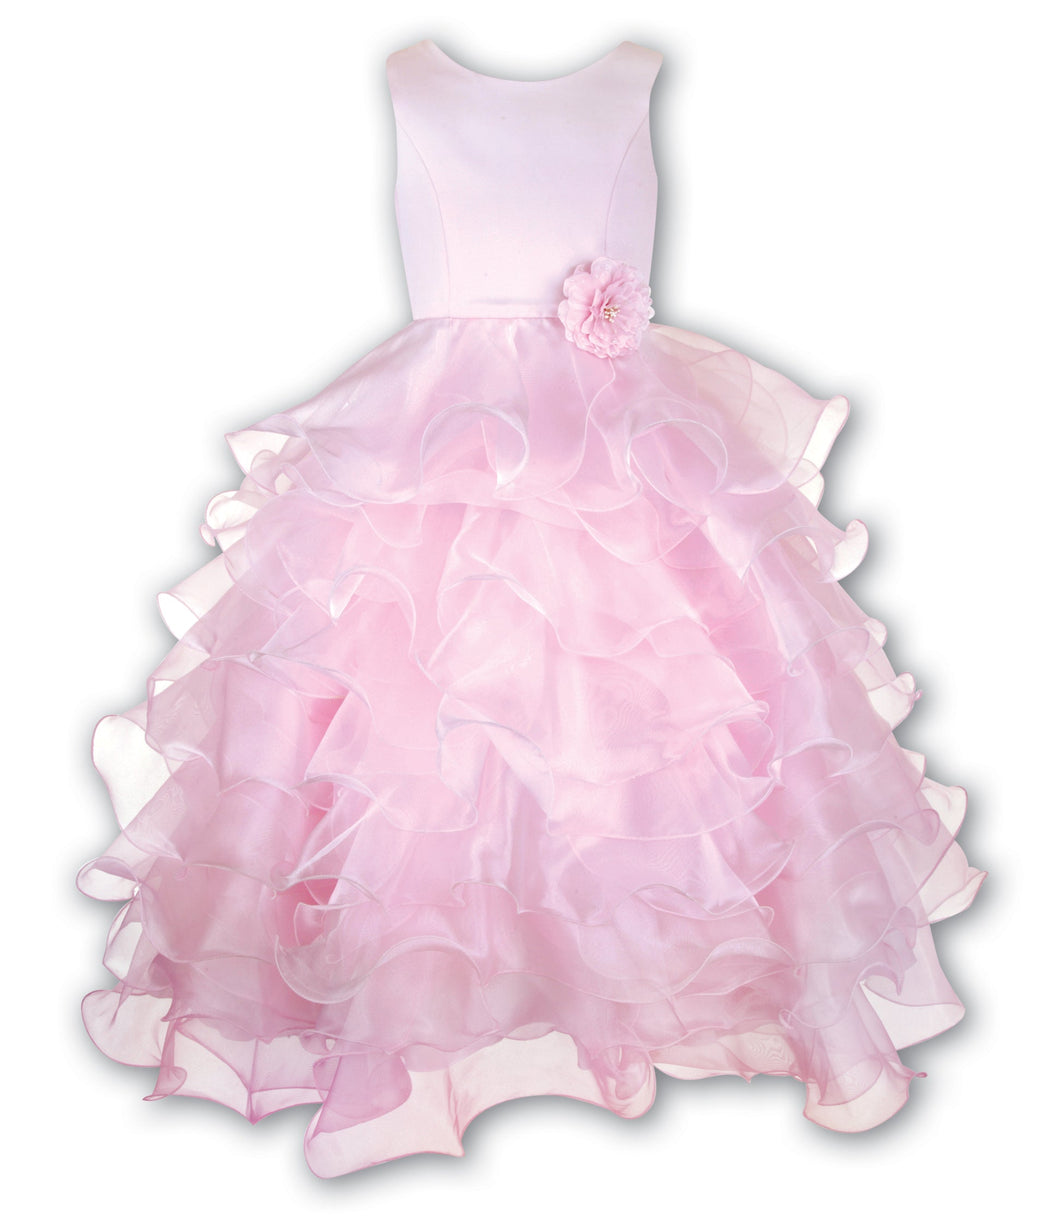 Flowergirl/bridesmaid ruffle Pink dress